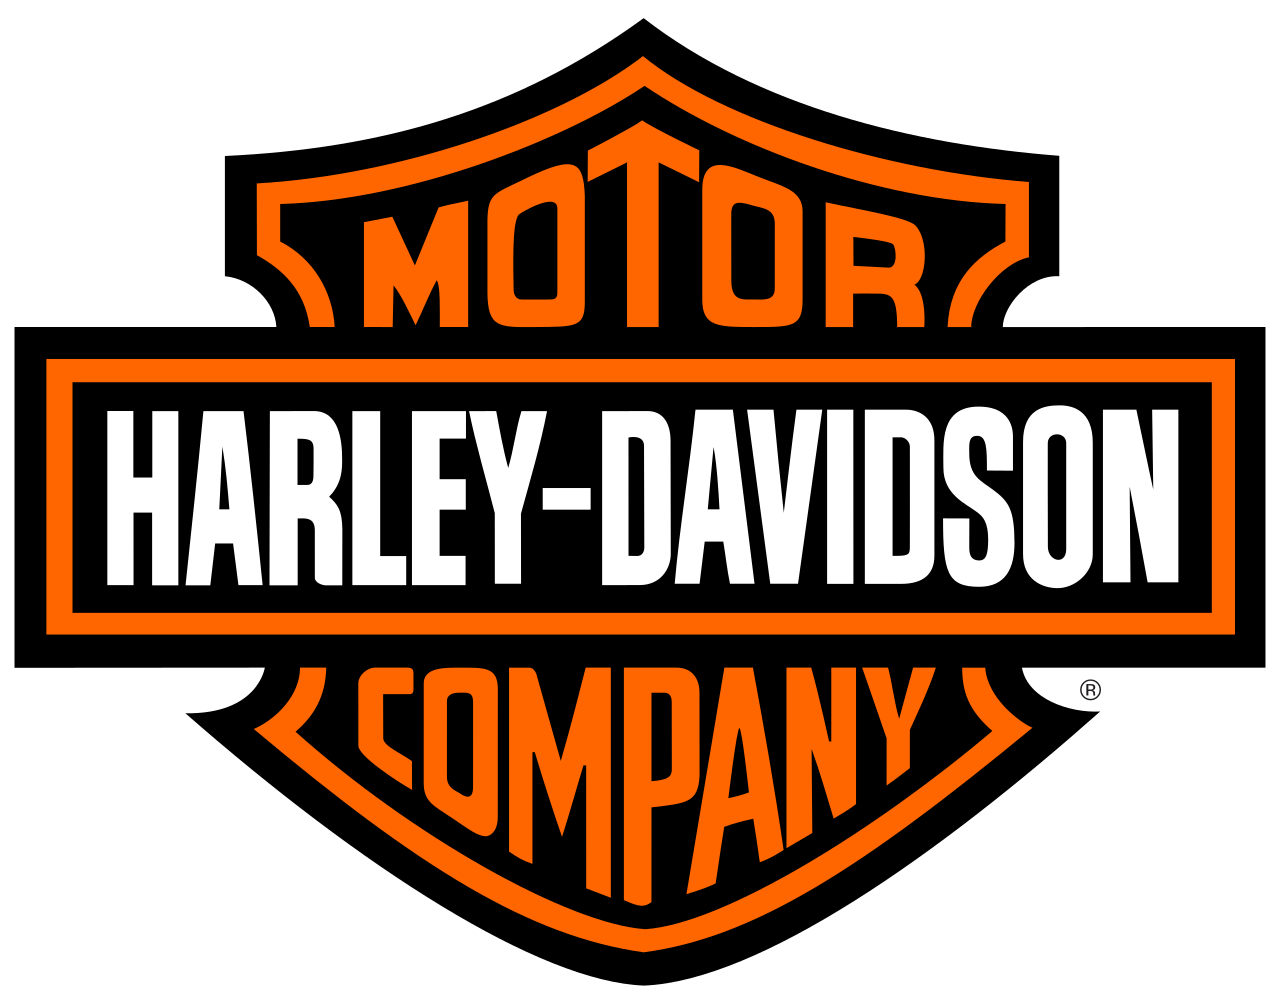 Harley-Davidson sues again over logo - Motorbike Writer